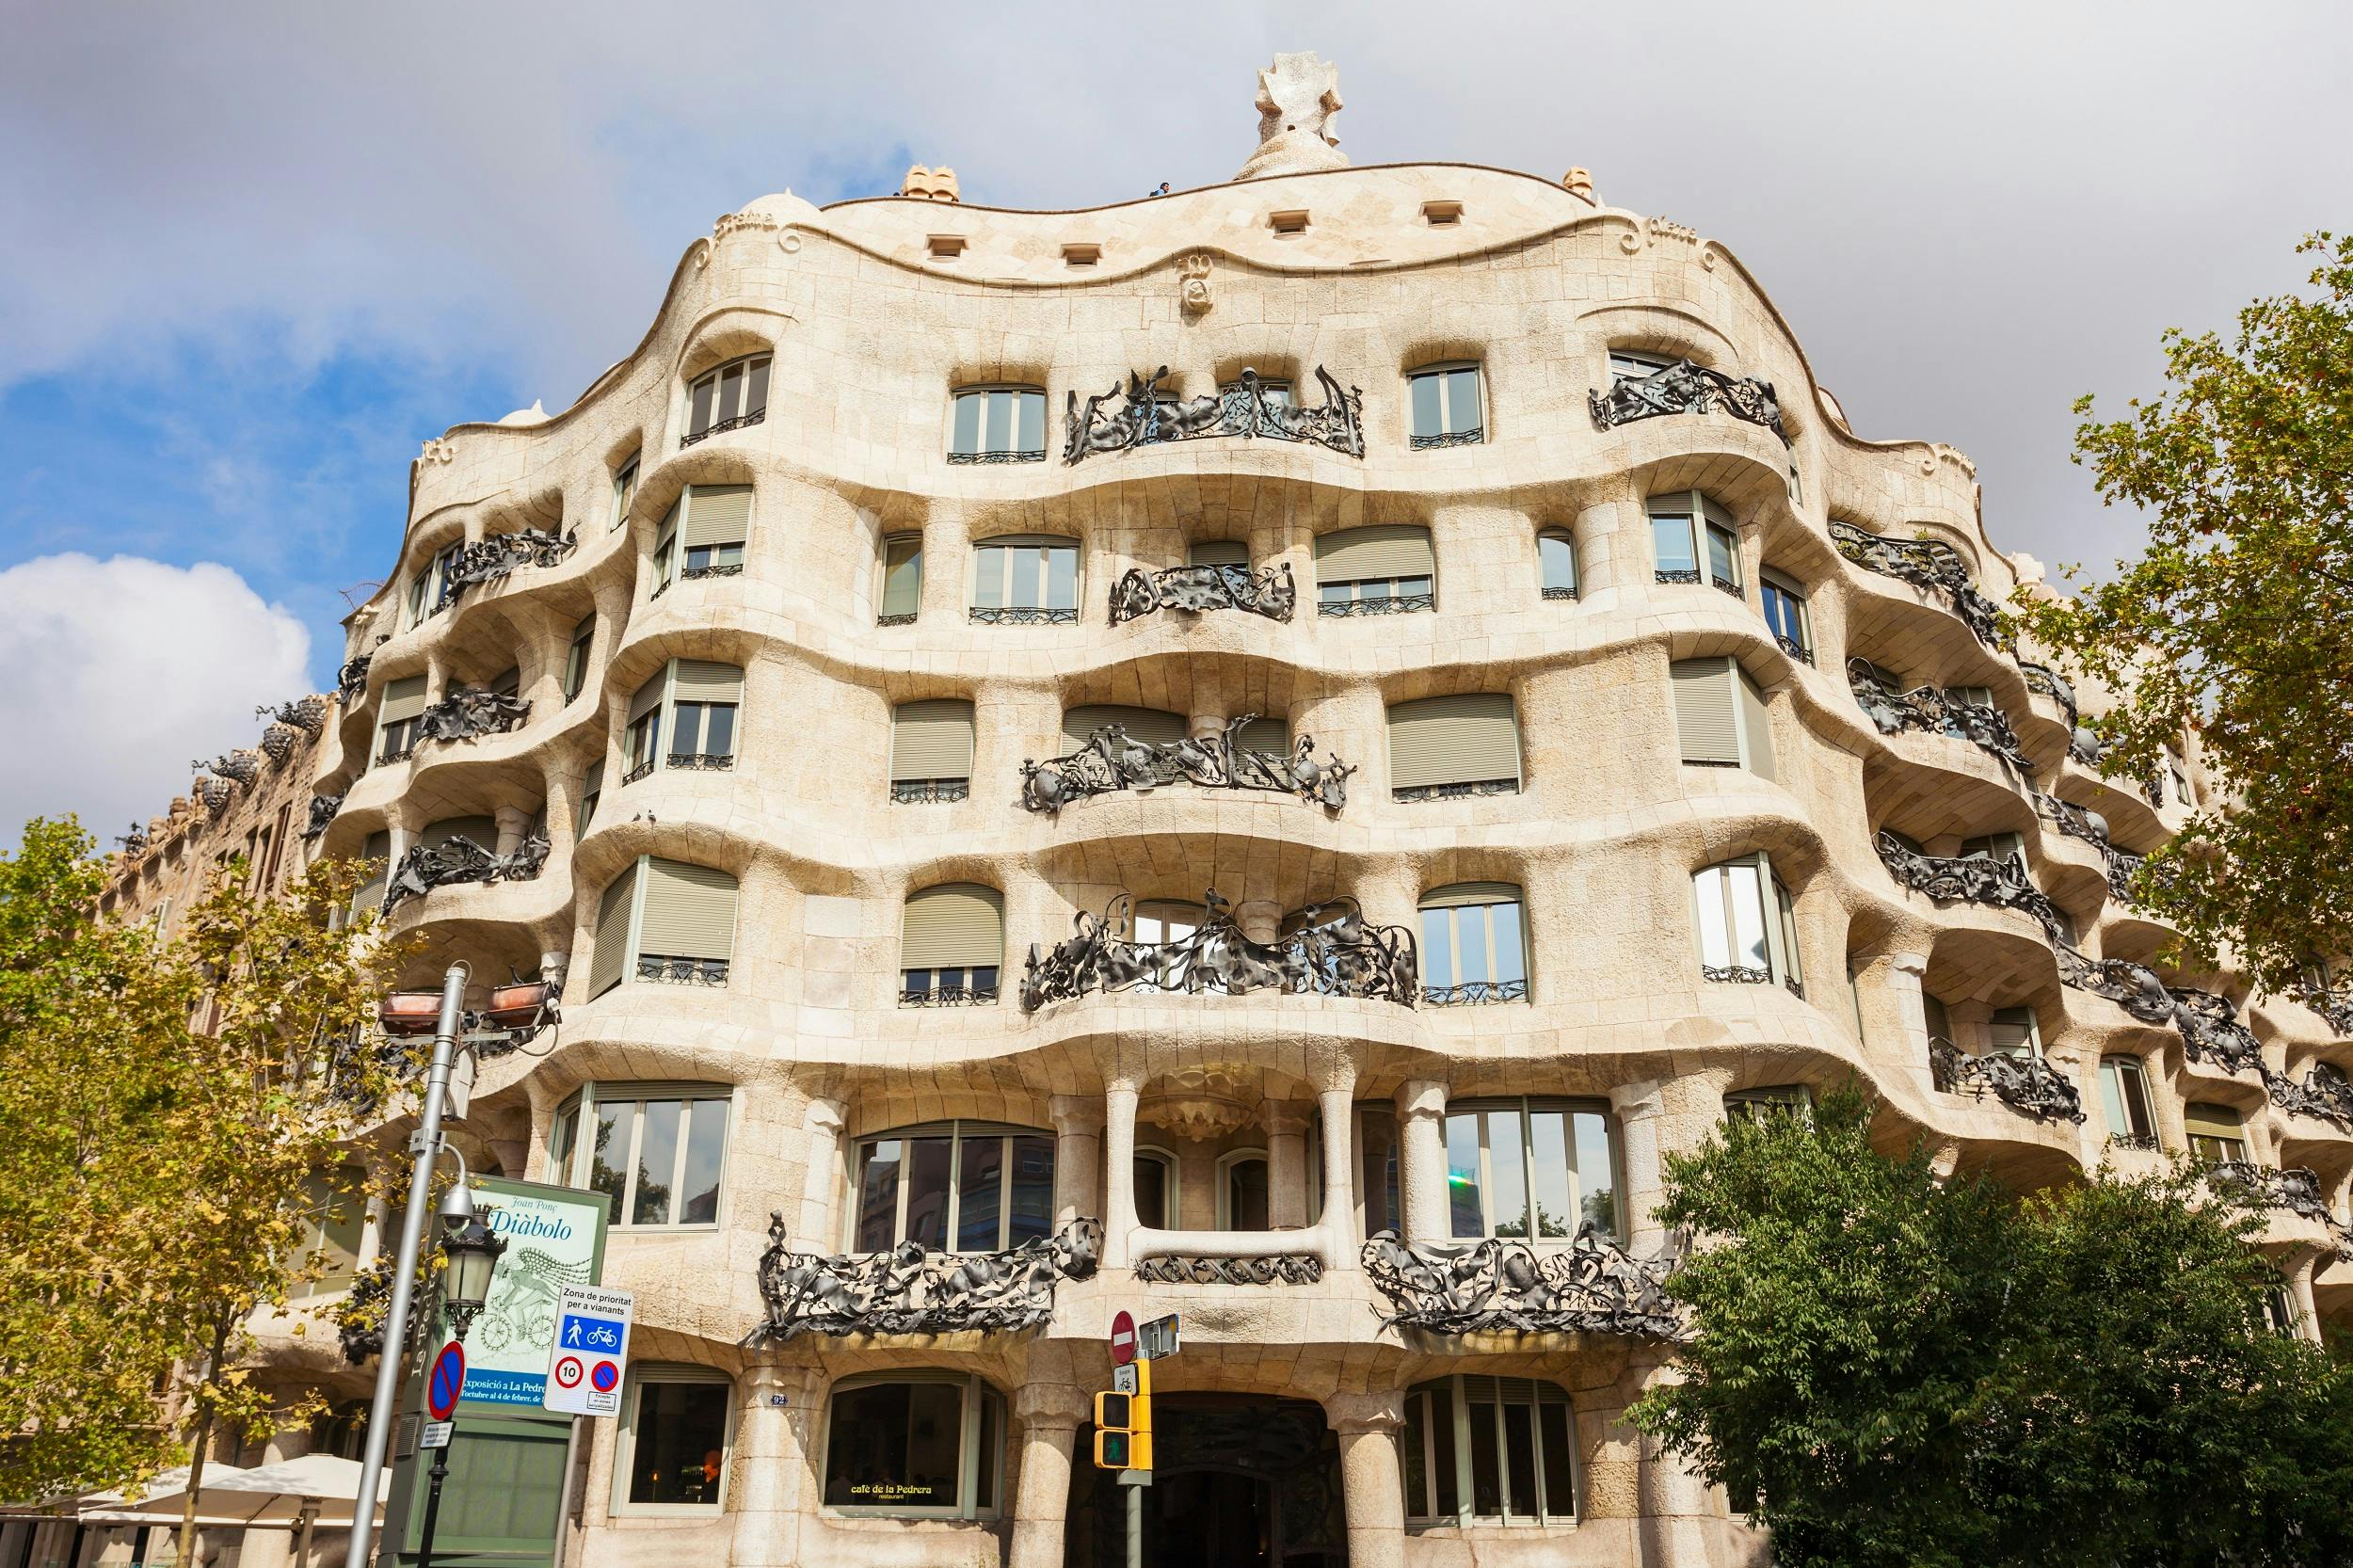 Gaudi's Modernist tour in Barcelona